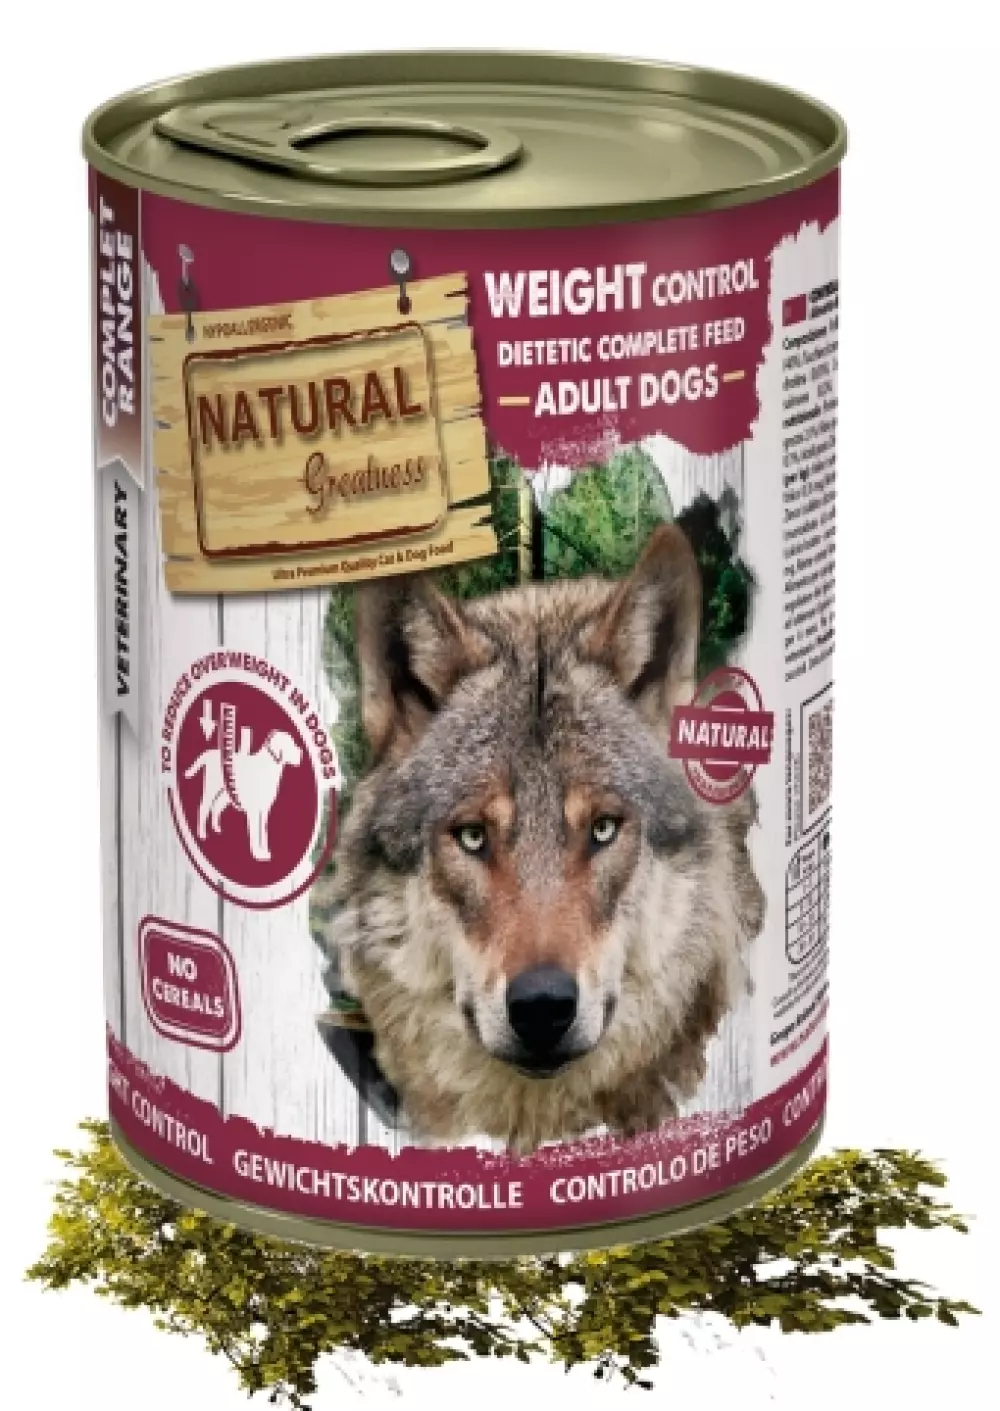 Natural Greatness Weight Control diet Vet 400g, 8425402399781, Hundemat, Natural Greatness, Arctic Pets AS, Weight Control Diet Vet 400g